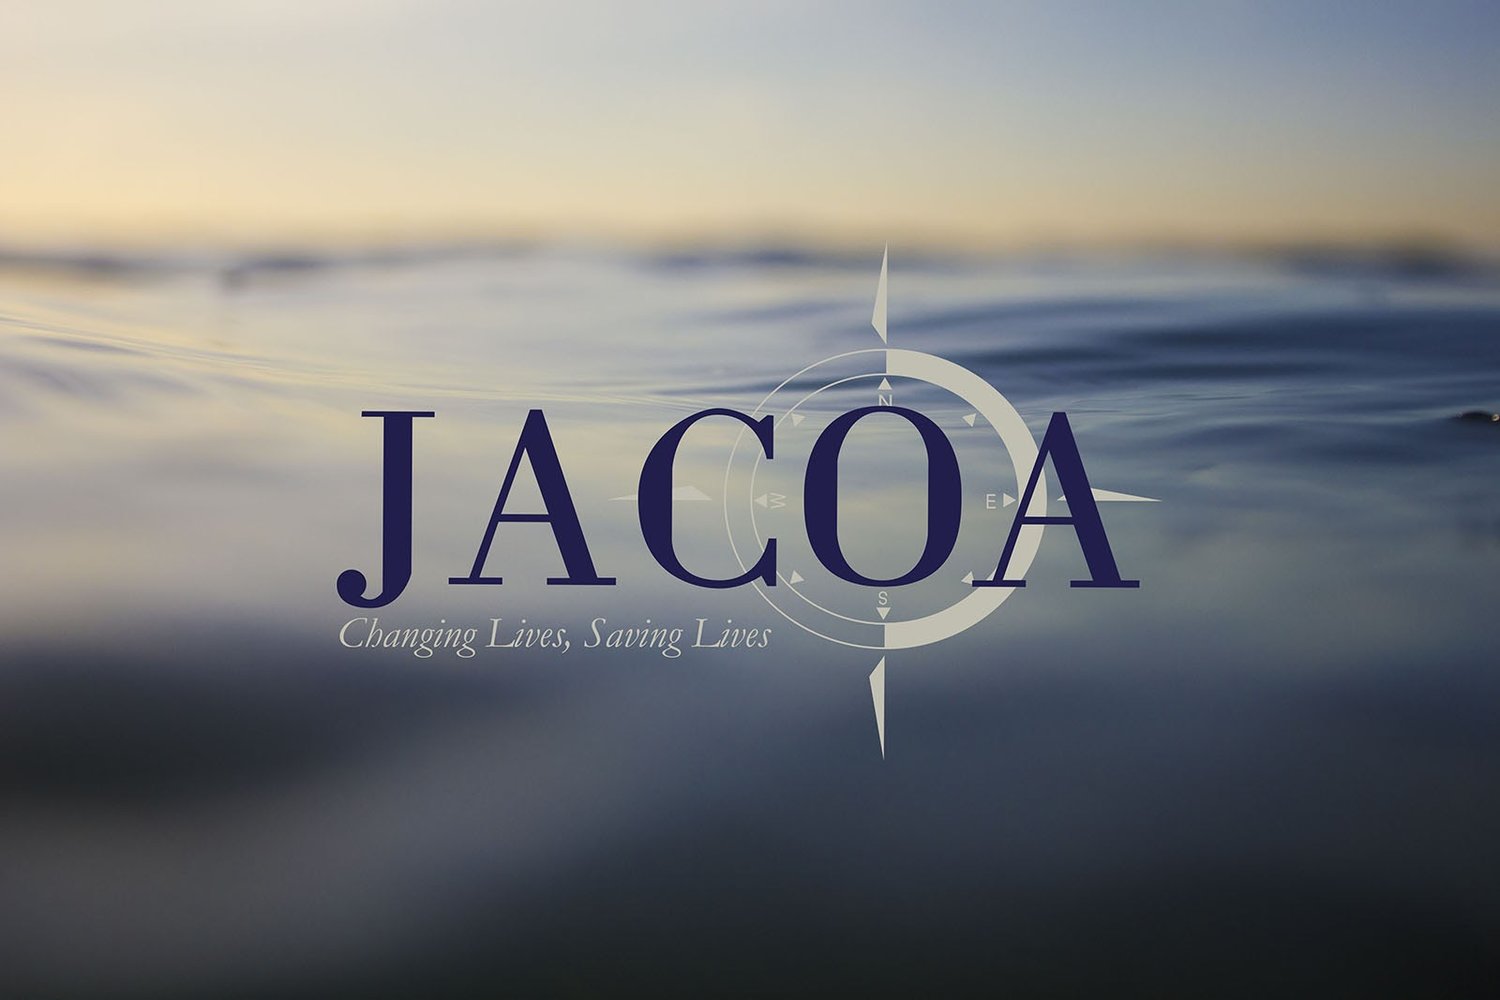 JACOA in Jackson